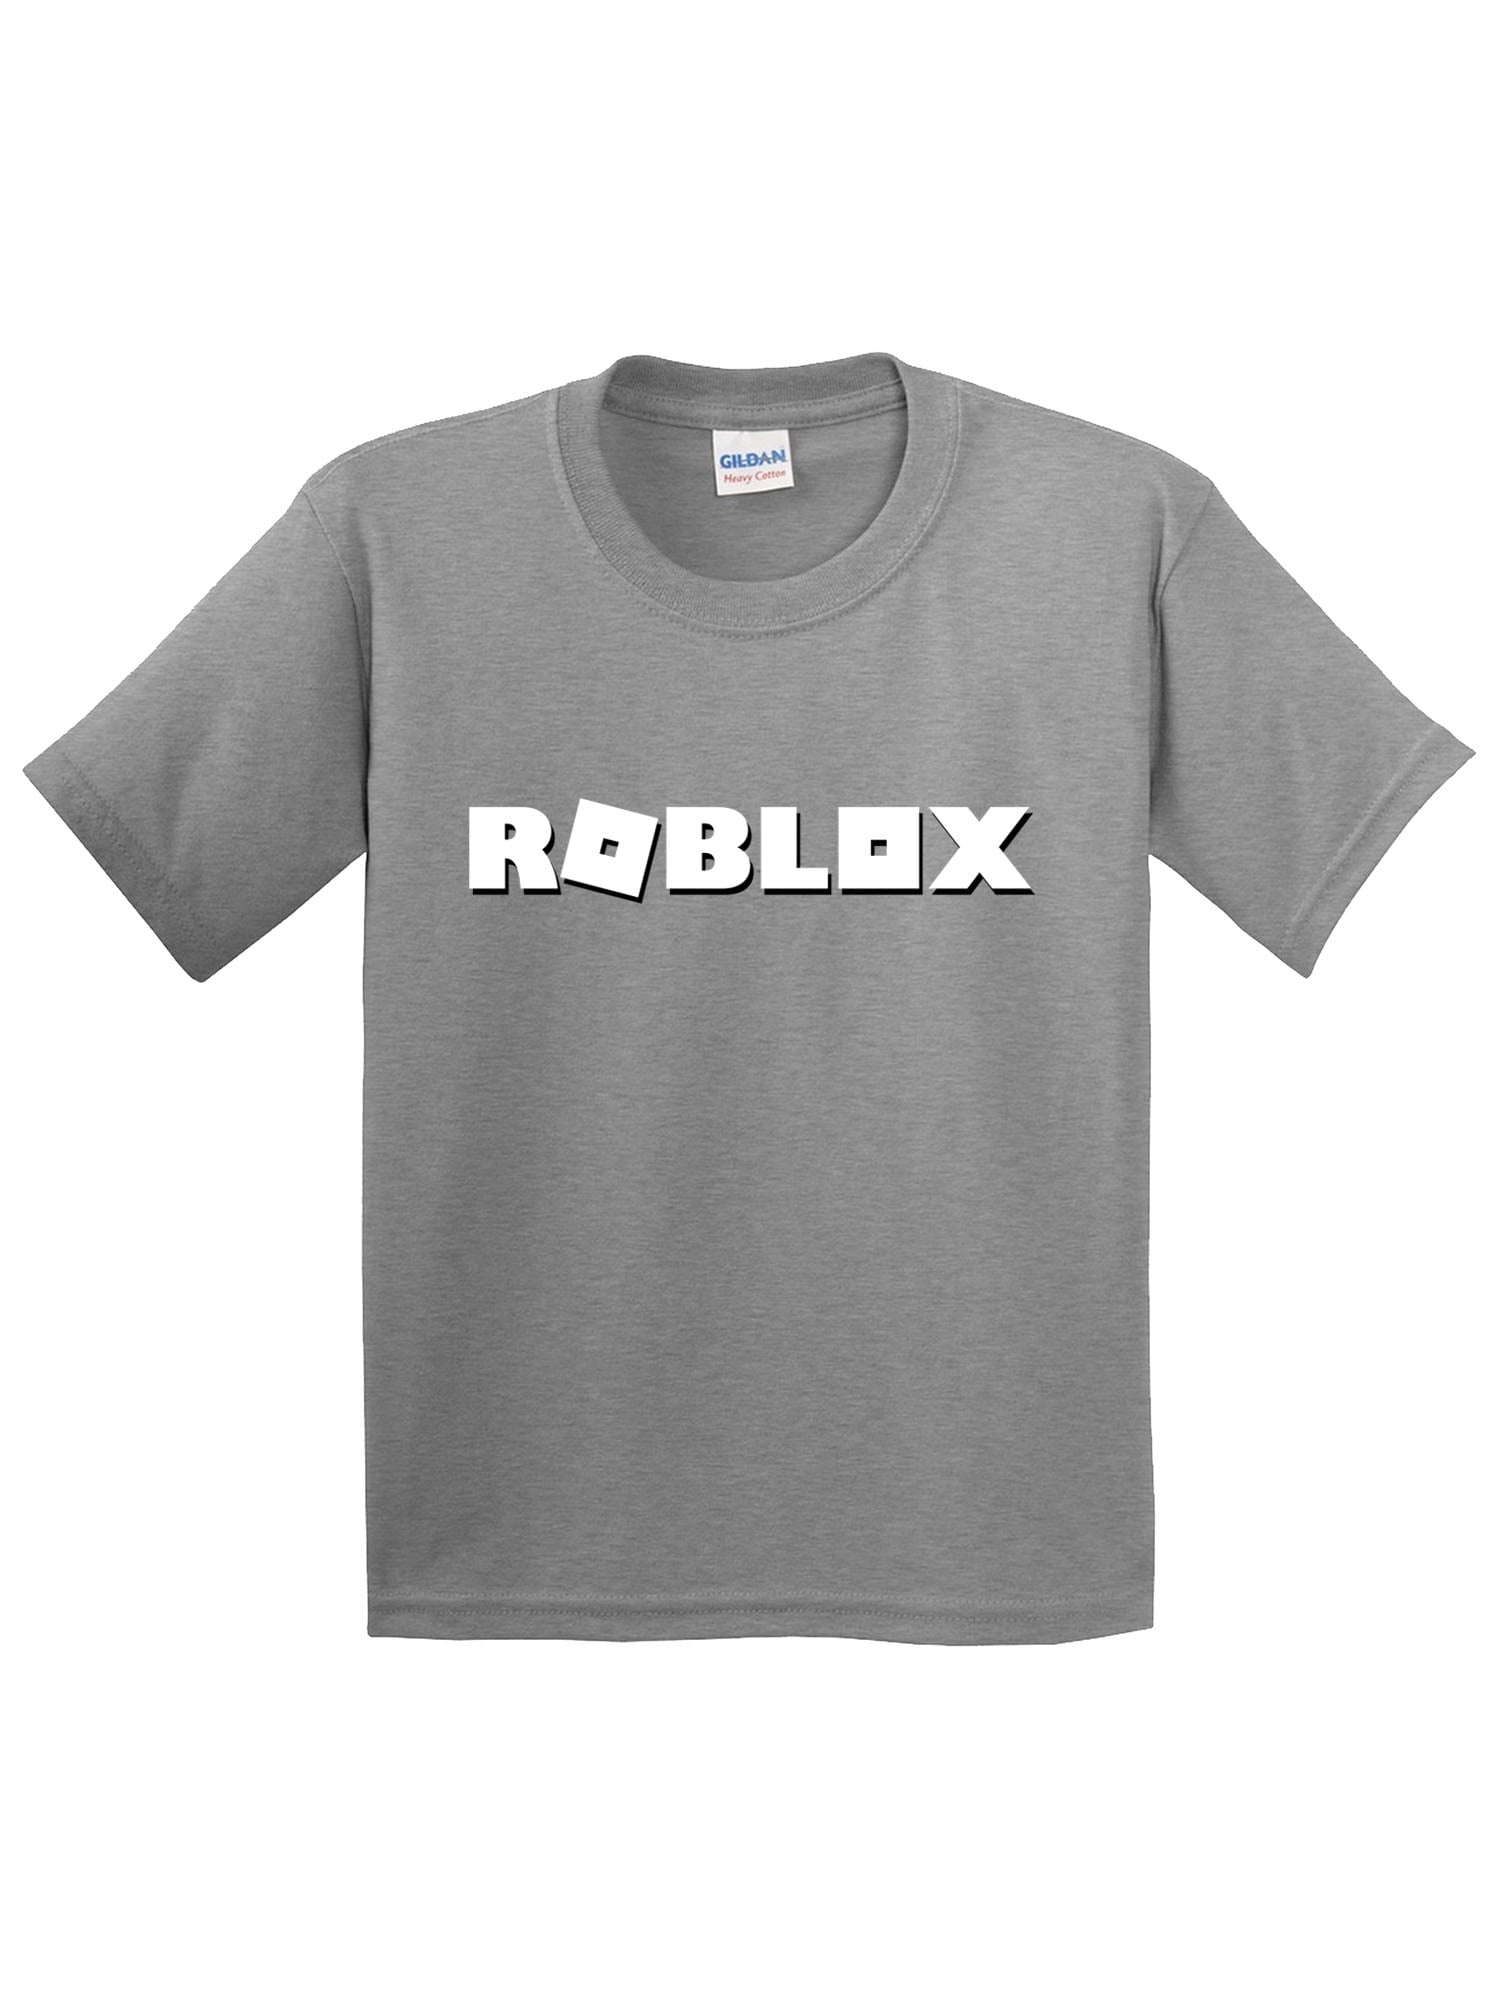 New Way New Way 923 Youth T Shirt Roblox Logo Game Accent Xl Heather Grey Walmart Com